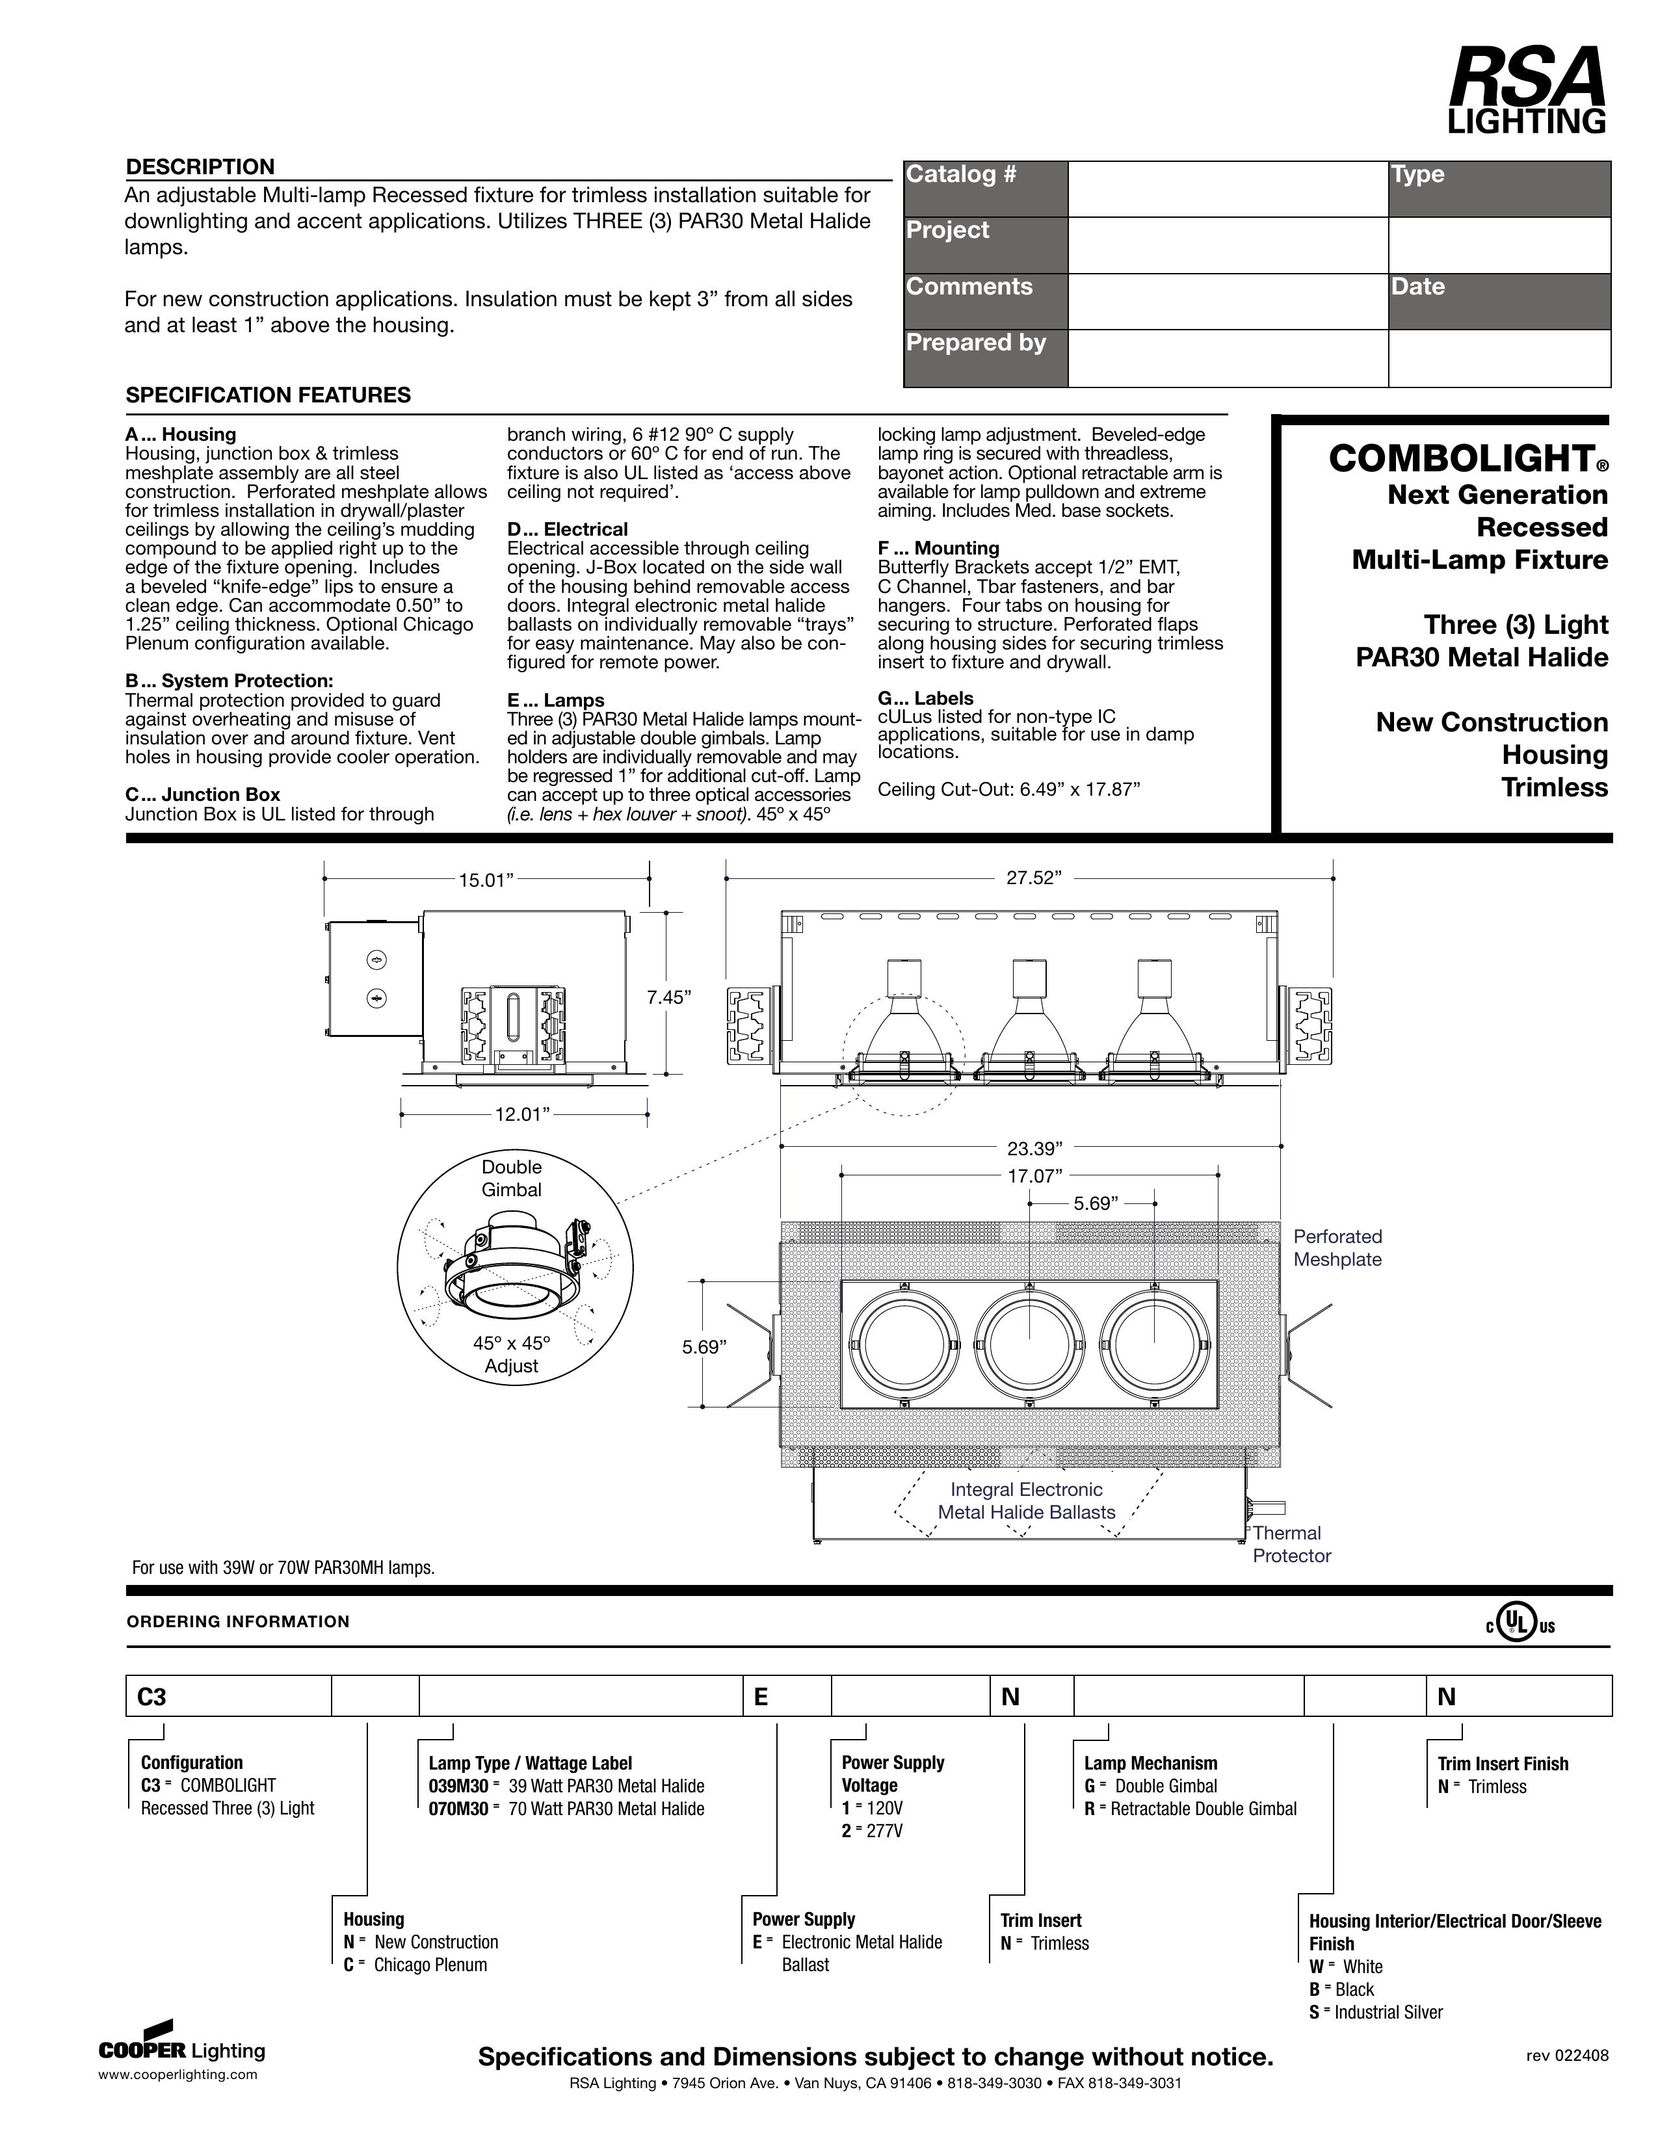 RSA Lighting 60 DHWH Indoor Furnishings User Manual